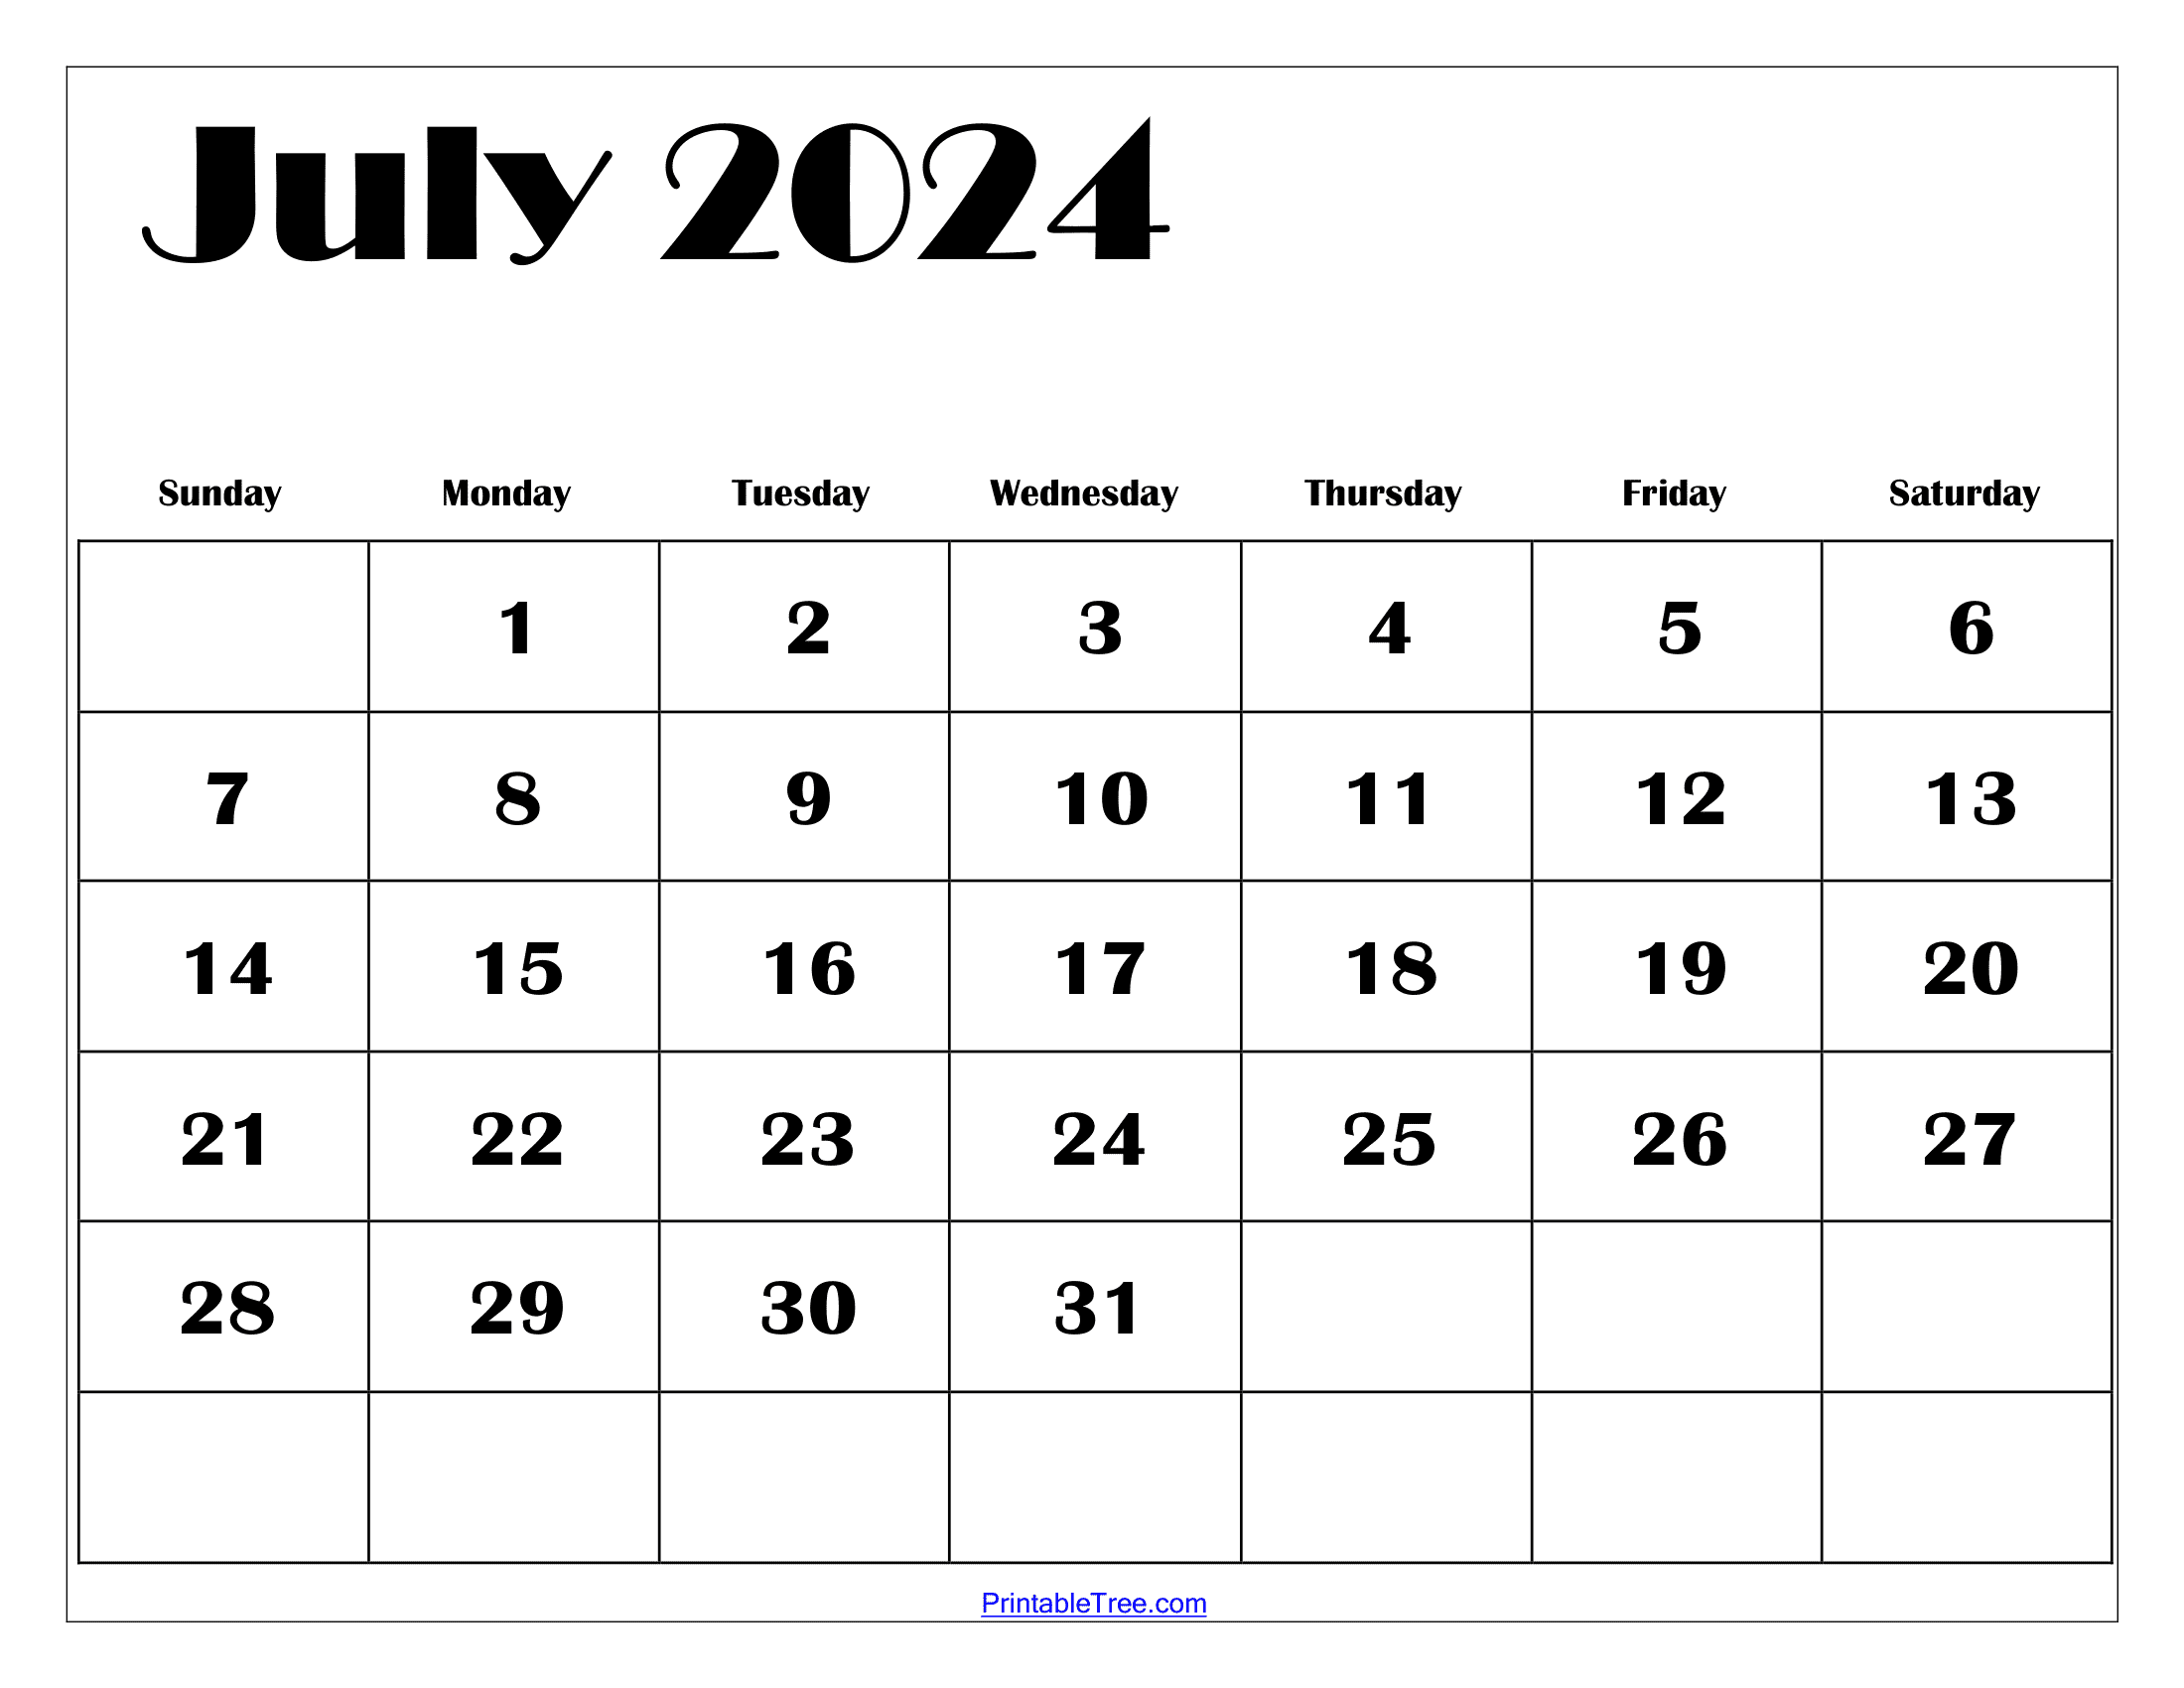 July 2024 Calendar Printable Pdf With Holidays Free Template for July Free Printable Calendar 2024